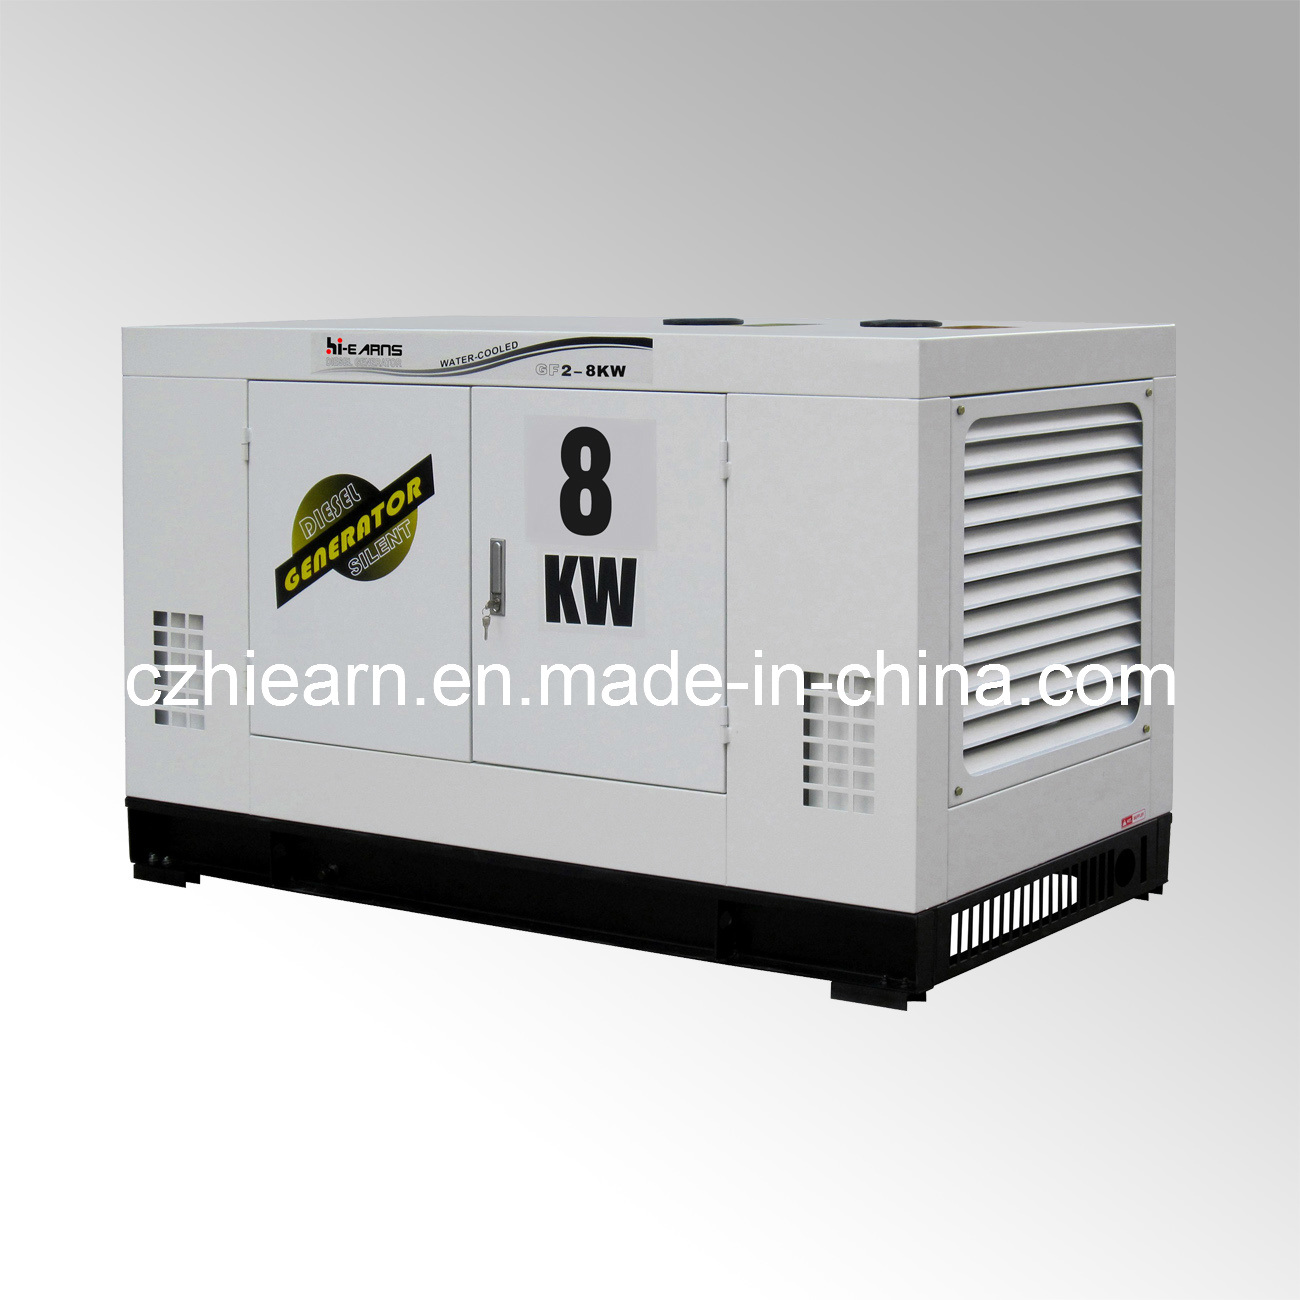 8kw Water-Cooled Silent Quanchai Diesel Generator (GF2-8KW)